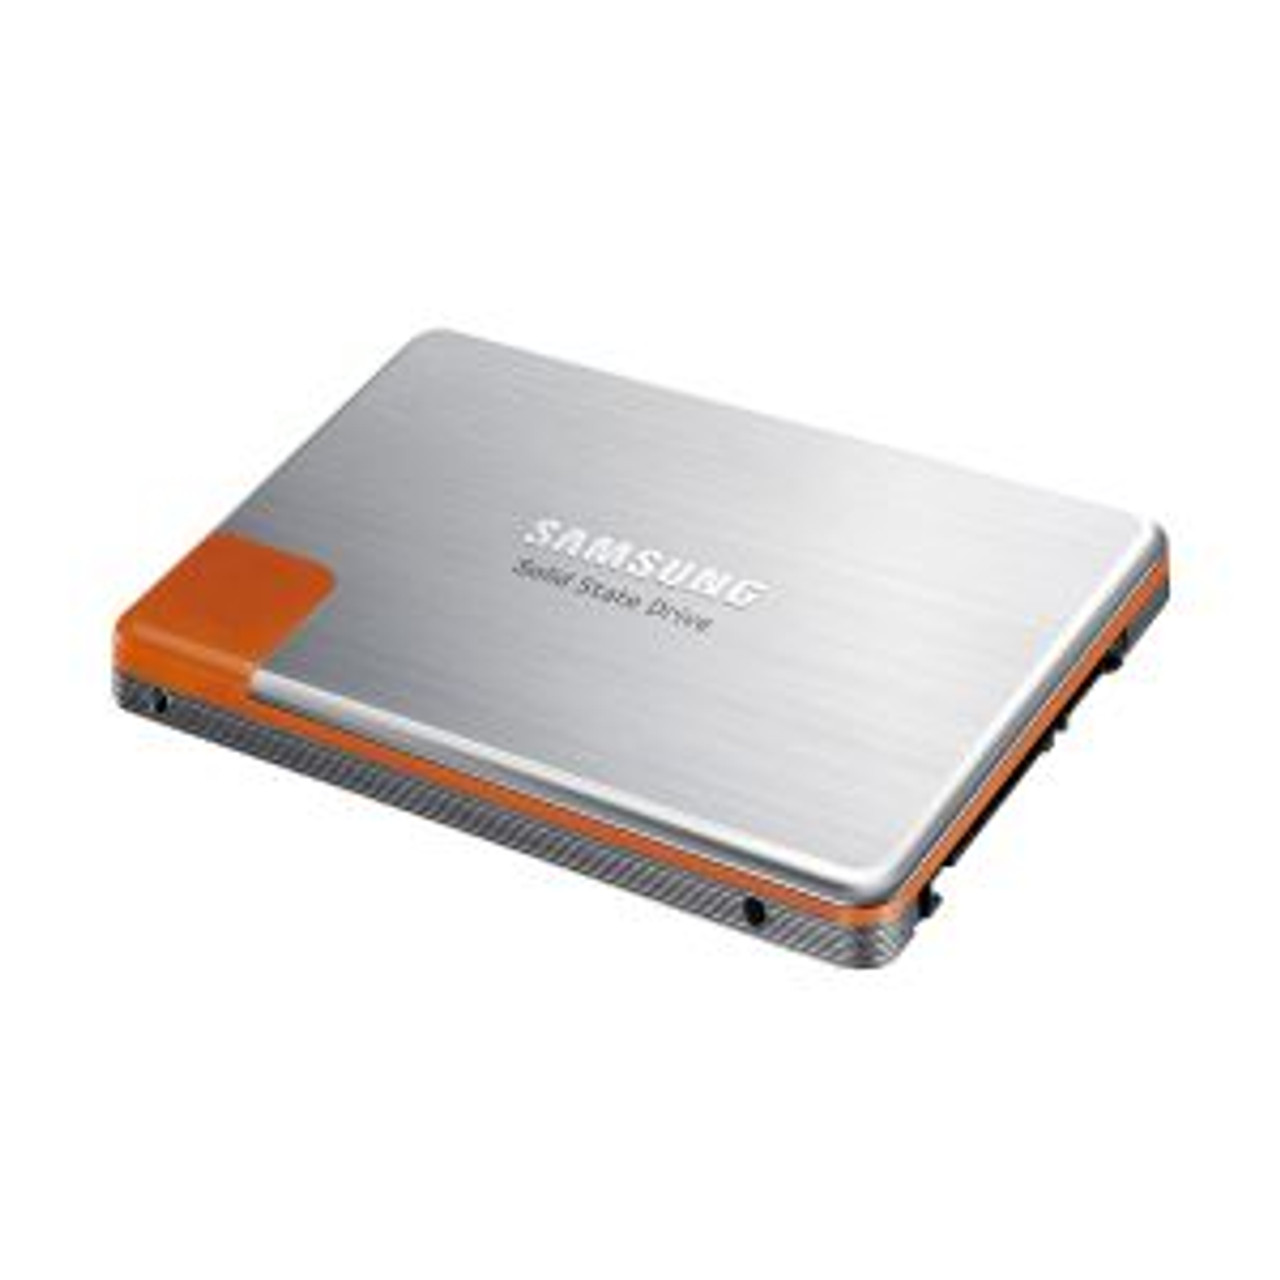 MZ-5PA128C | Samsung | 470 Series 128GB MLC SATA 3Gb/s 2.5-inch Solid State Drive (SSD)